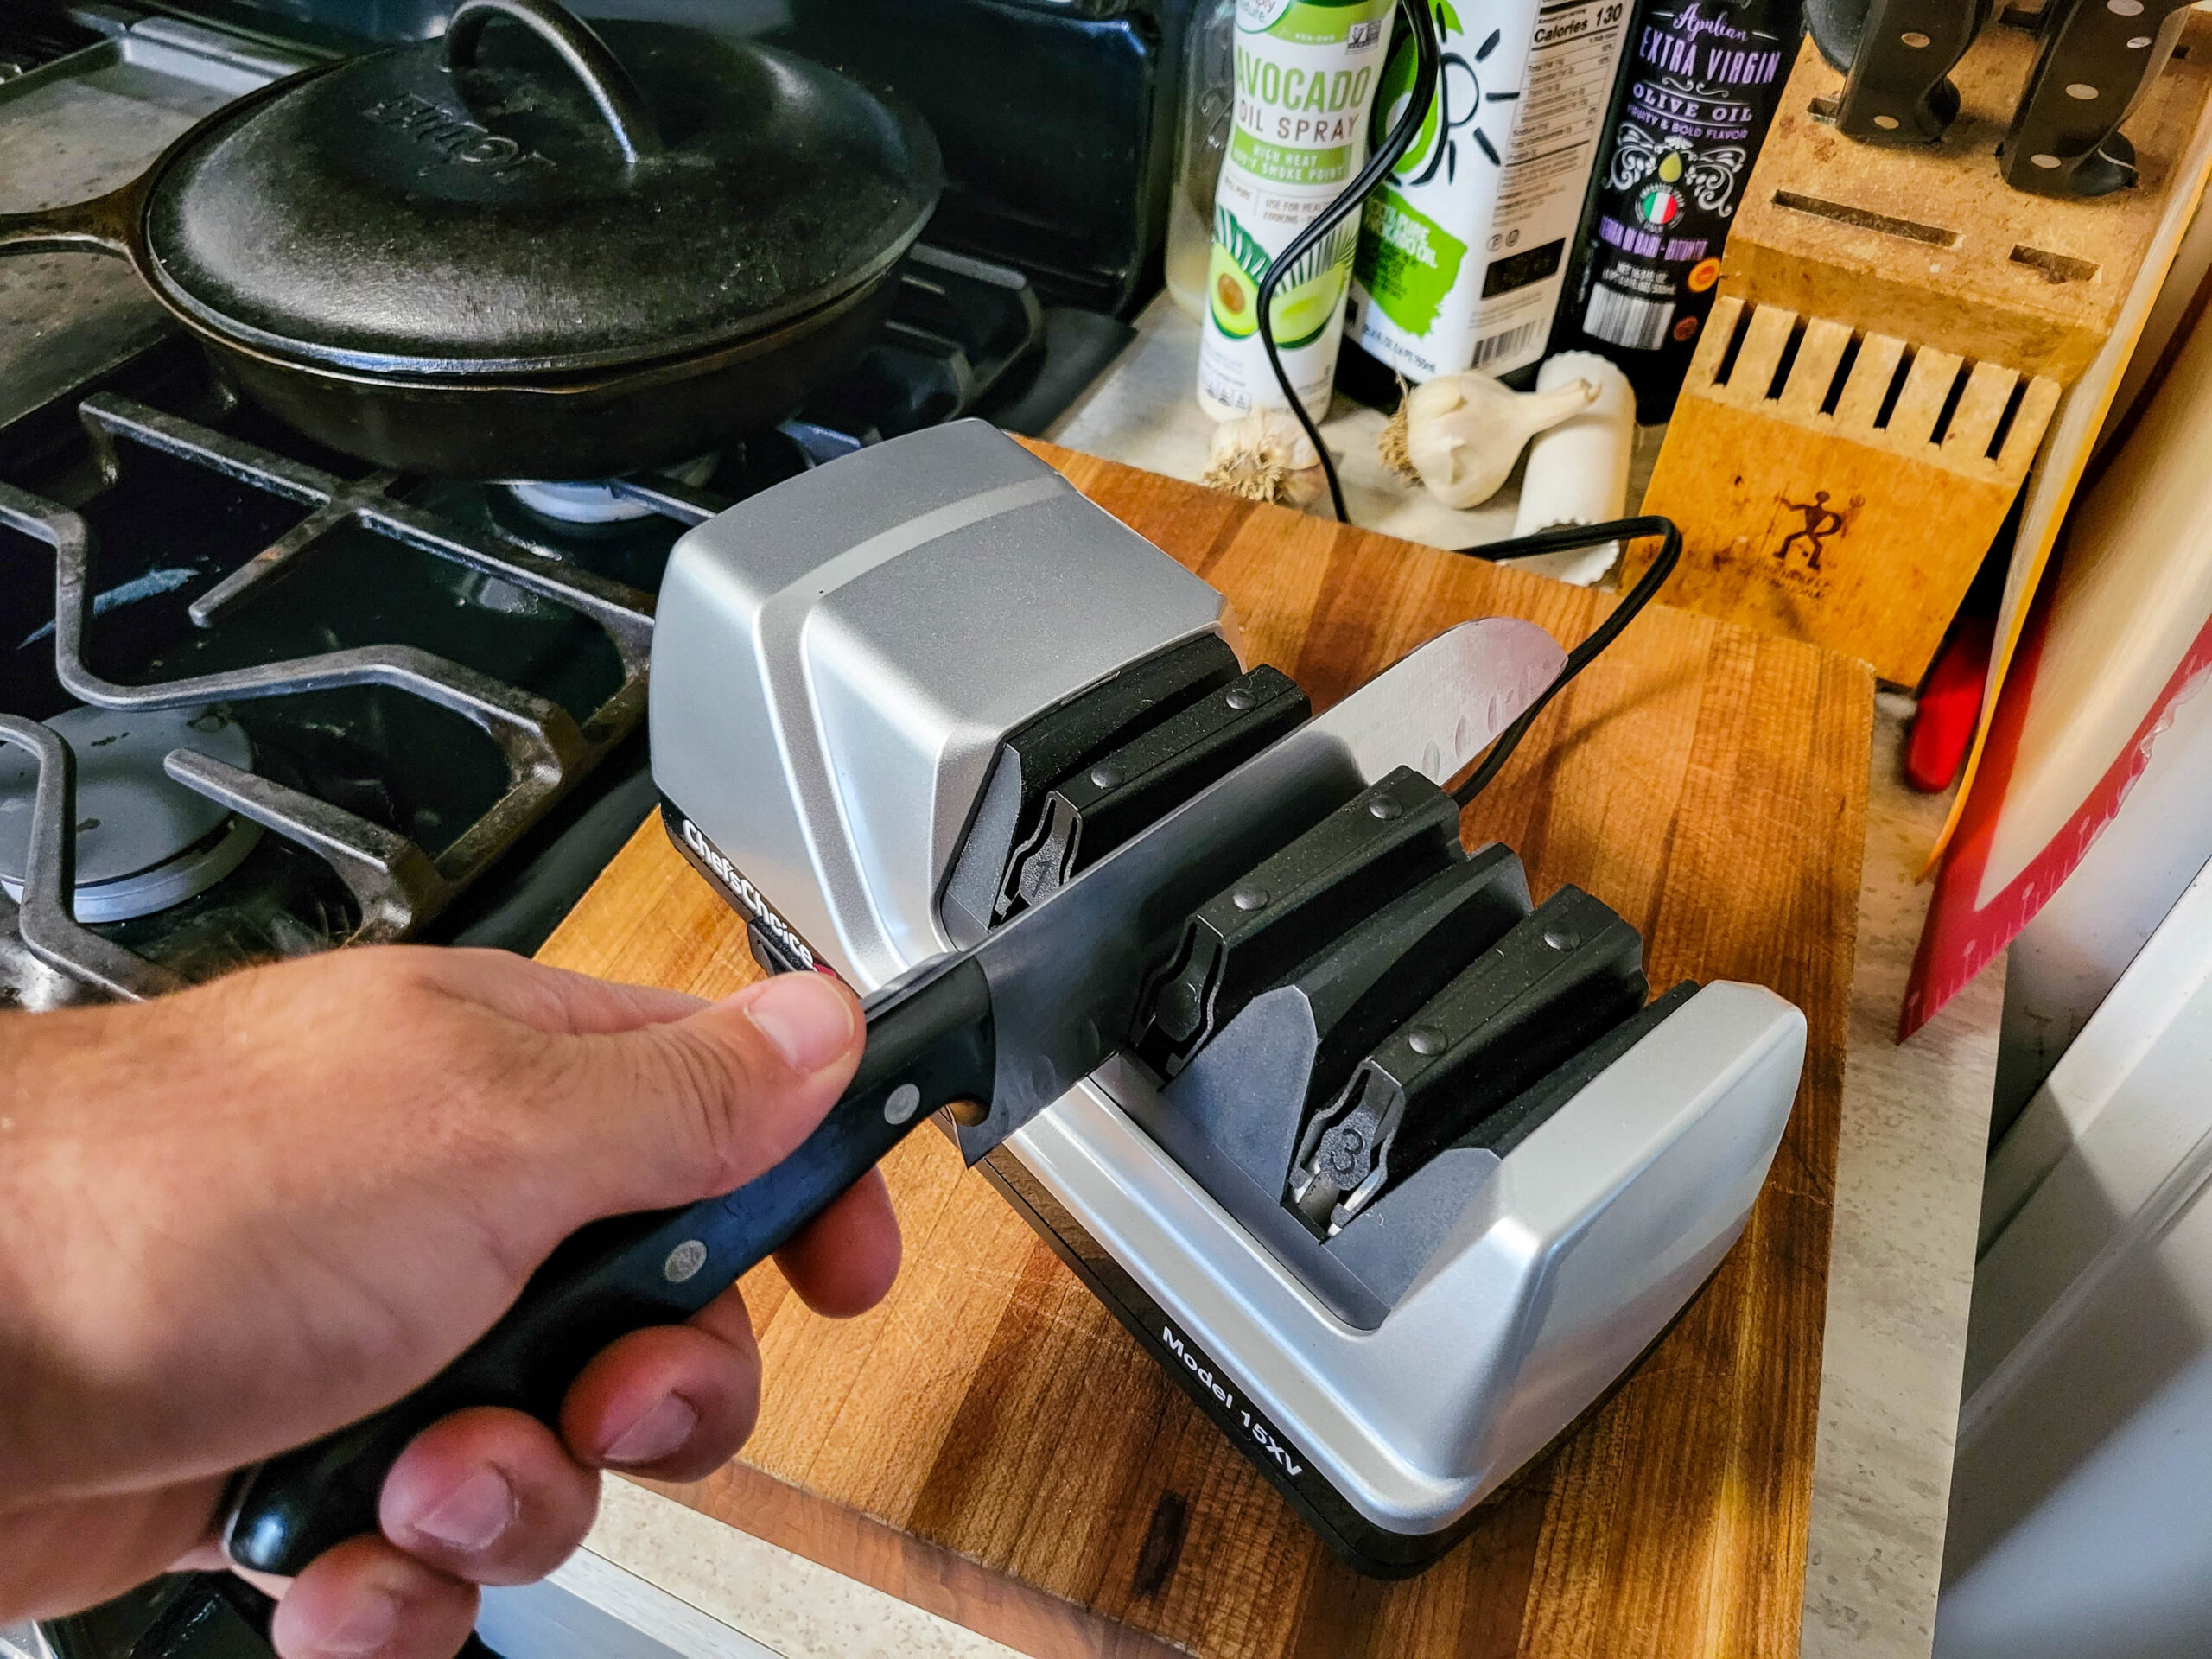 The best electric knife sharpener for kitchen knives.